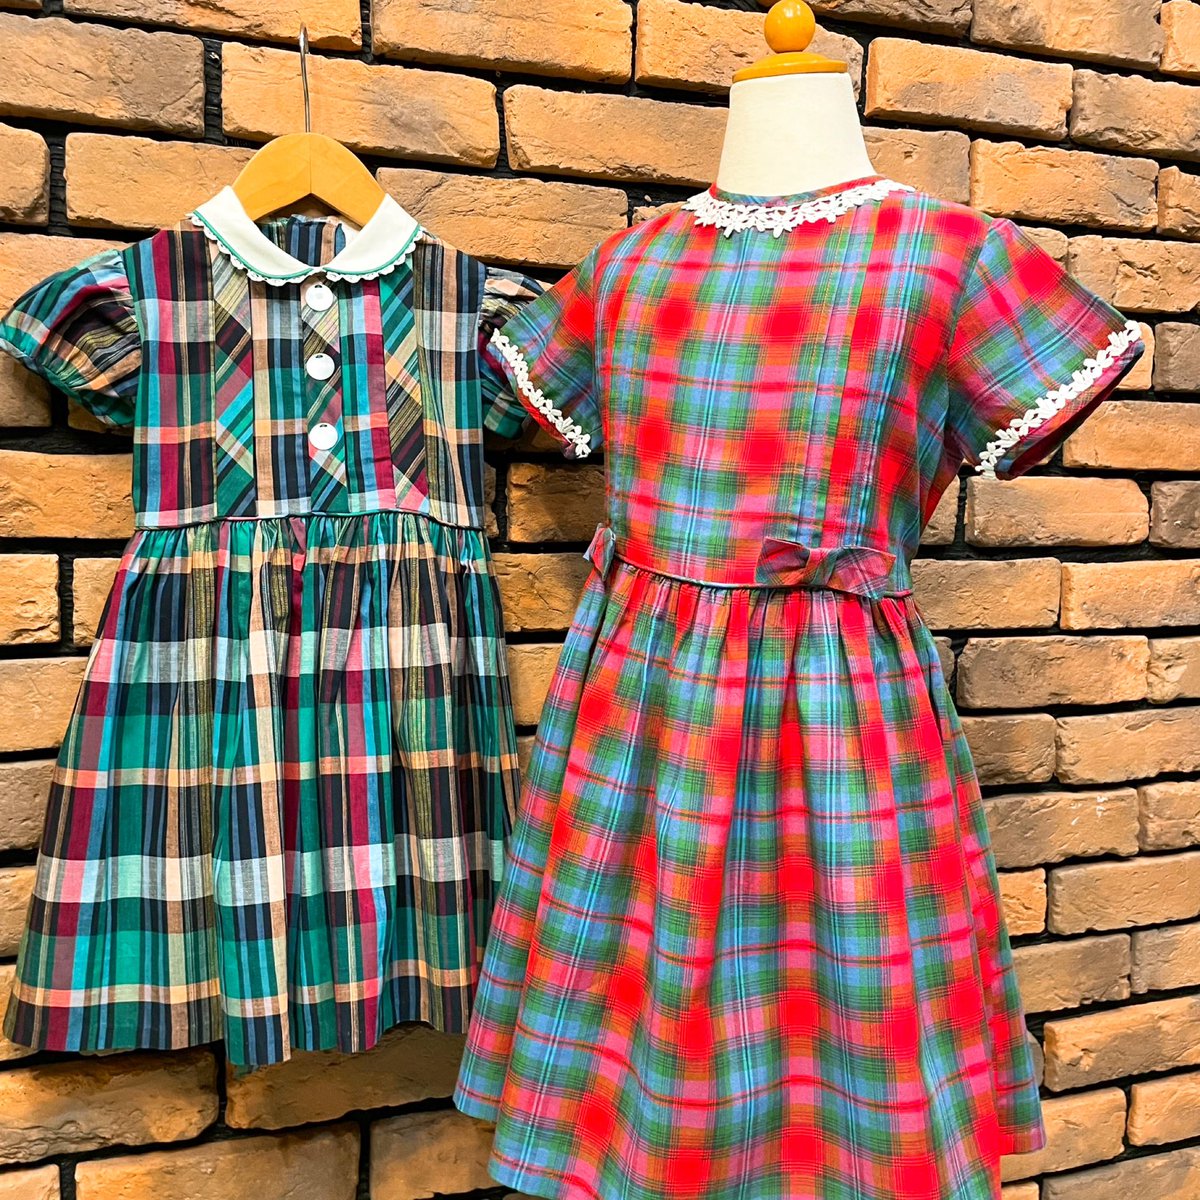 ❤️💙💚🤍❤️💚
『1950’s Cotton Plaid Girls Dress 』
honey-bop.com/?pid=175130025
honey-bop.com/?pid=175129953
🤍💙💚🤍❤️💙
⁡
🌼HONEY BOP🌼
〒460-0011
愛知県名古屋市中区大須2-7-46-2F
📞 052-253-6637
📩 honey_bop@opal.plala.or.jp
🛒 honey-bop.com
#honeybop #vintage #vintagekids